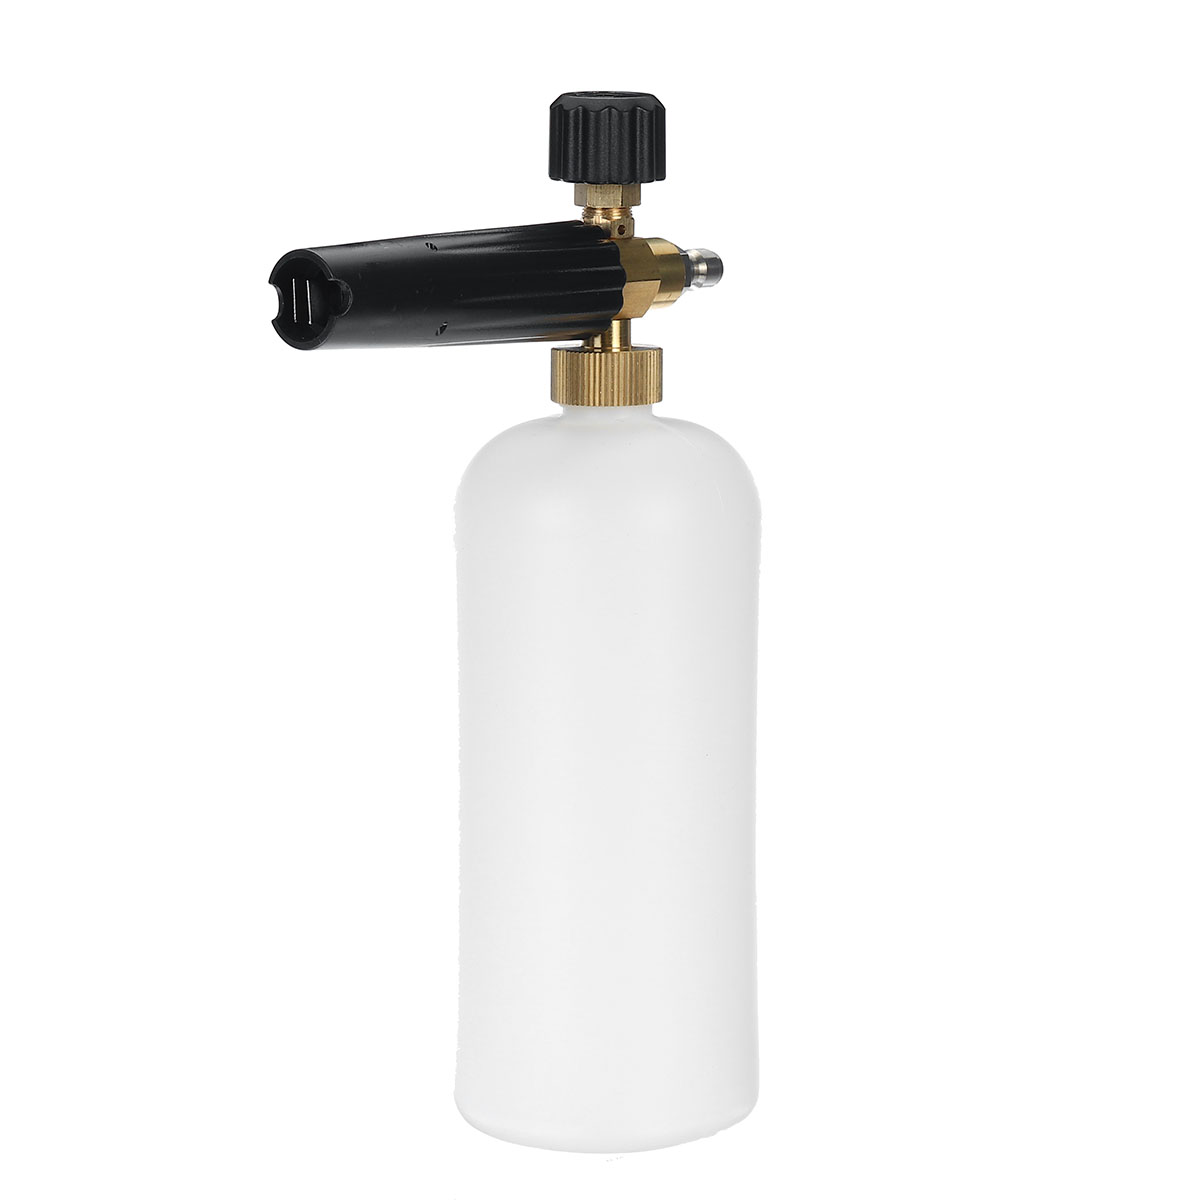 Adjustable-Snow-Foam-Lance-Sprayer-Washer-Soap-Bottle-Car-Pressure-Washer-1L-1662575-3